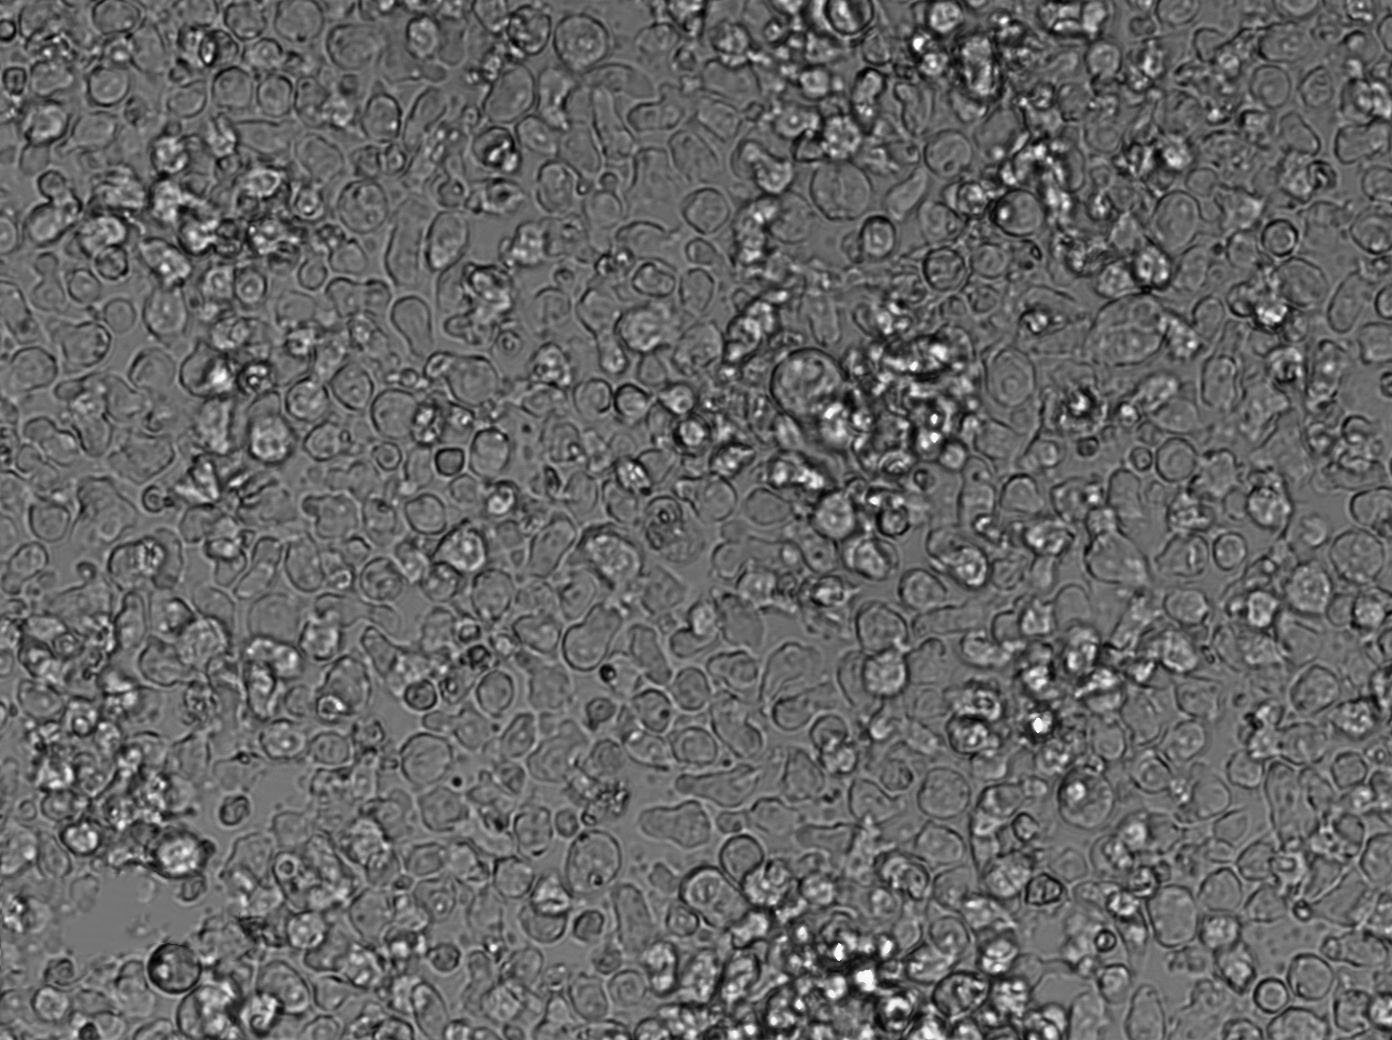 Karpas-299 Cell|人间变性大细胞淋巴瘤细胞